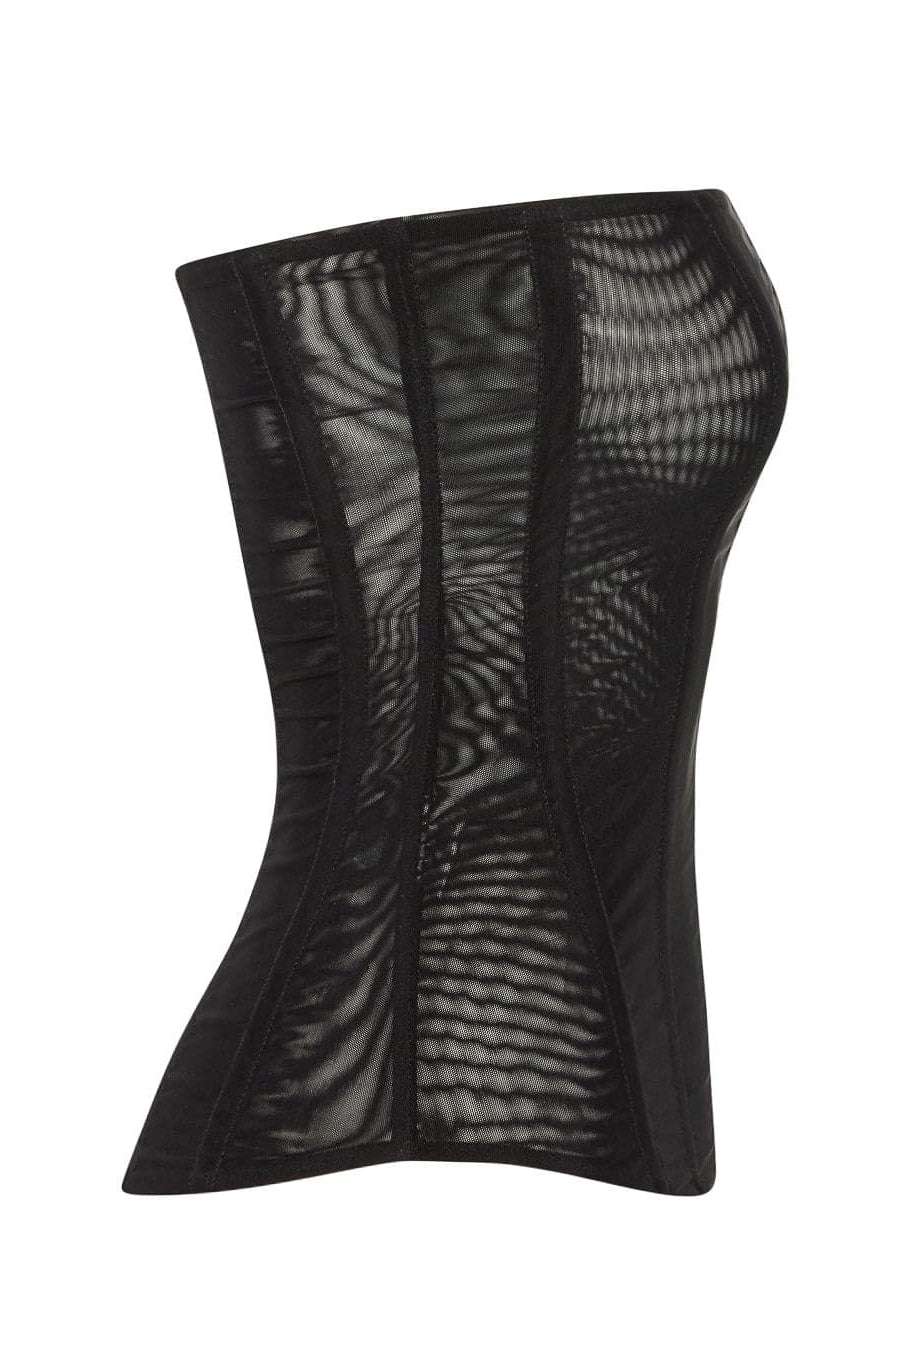 leau muse mesh corset top in black